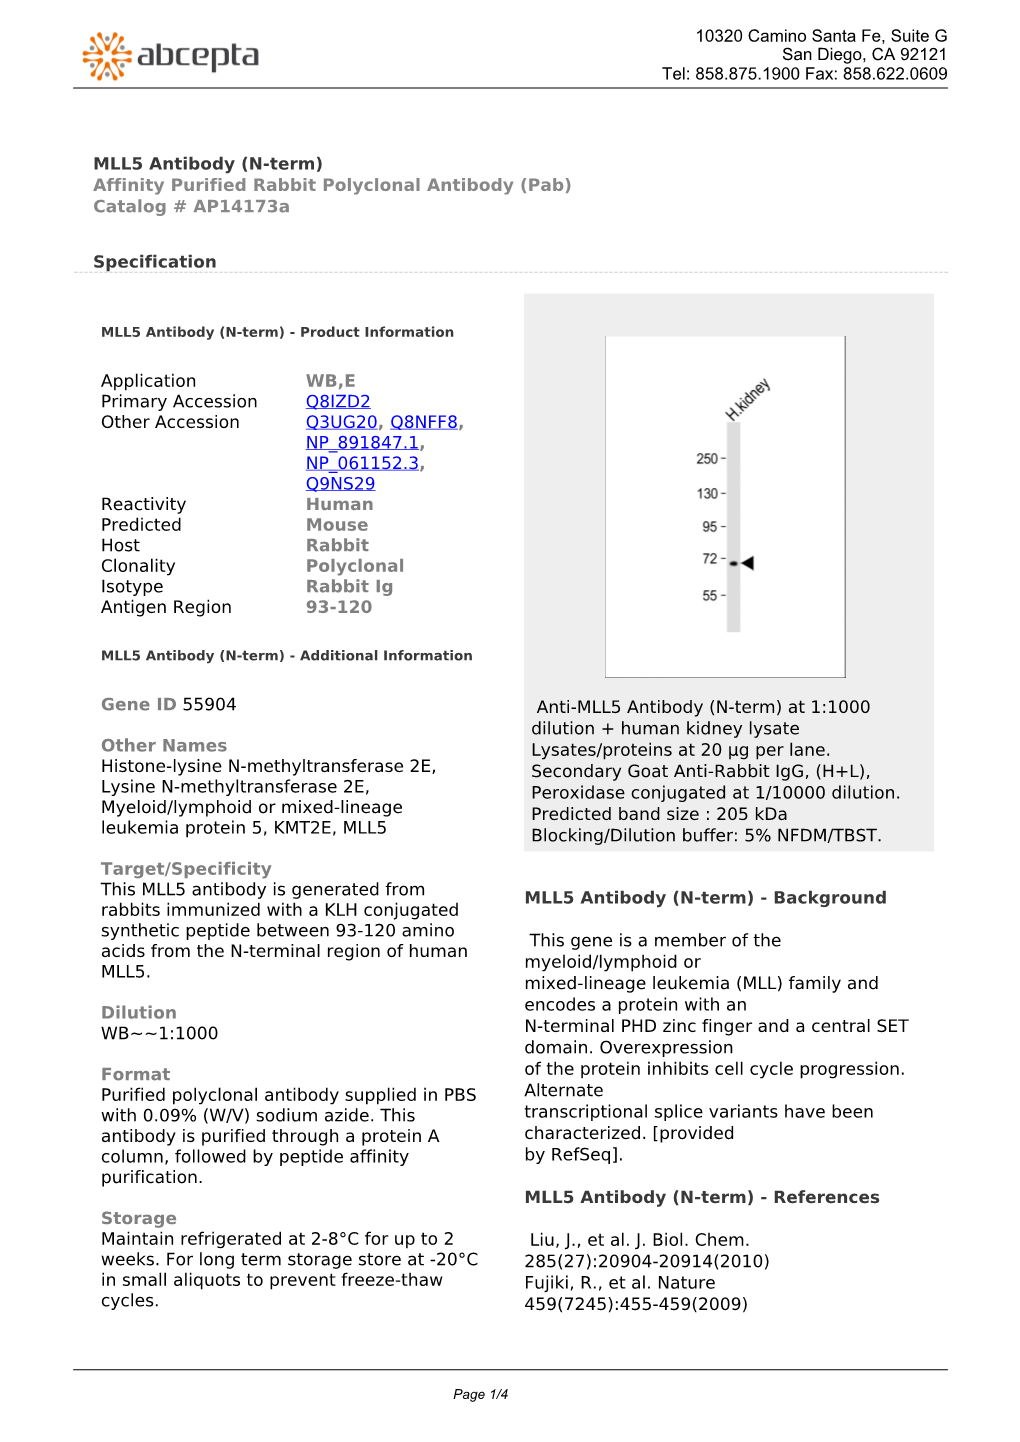 MLL5 Antibody (N-Term) Affinity Purified Rabbit Polyclonal Antibody (Pab) Catalog # Ap14173a